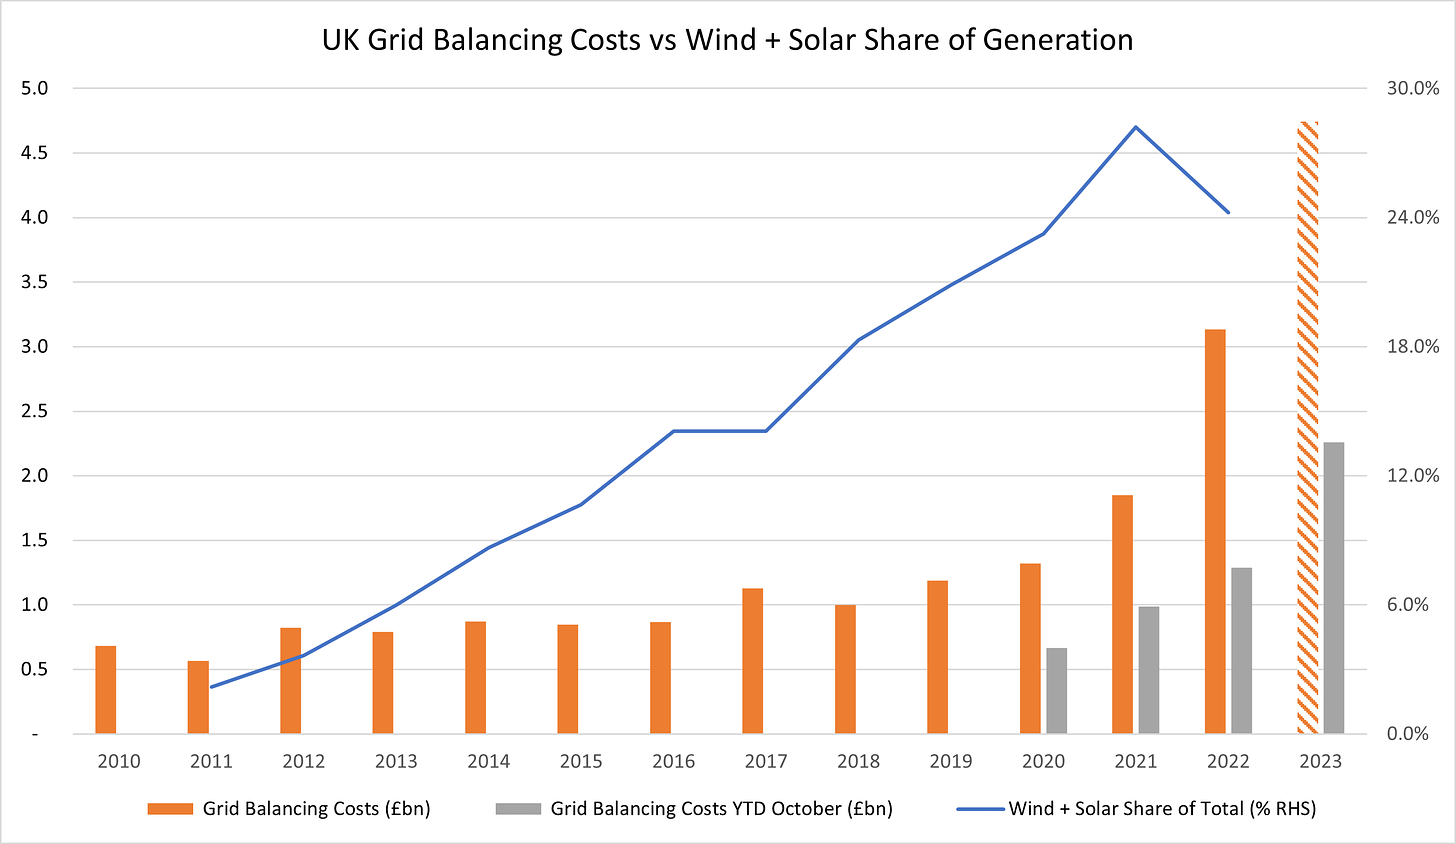 Hidden Costs of Renewables: UK Grid Balancing Costs (£bn) vs Wind and Solar Share 2010-2023